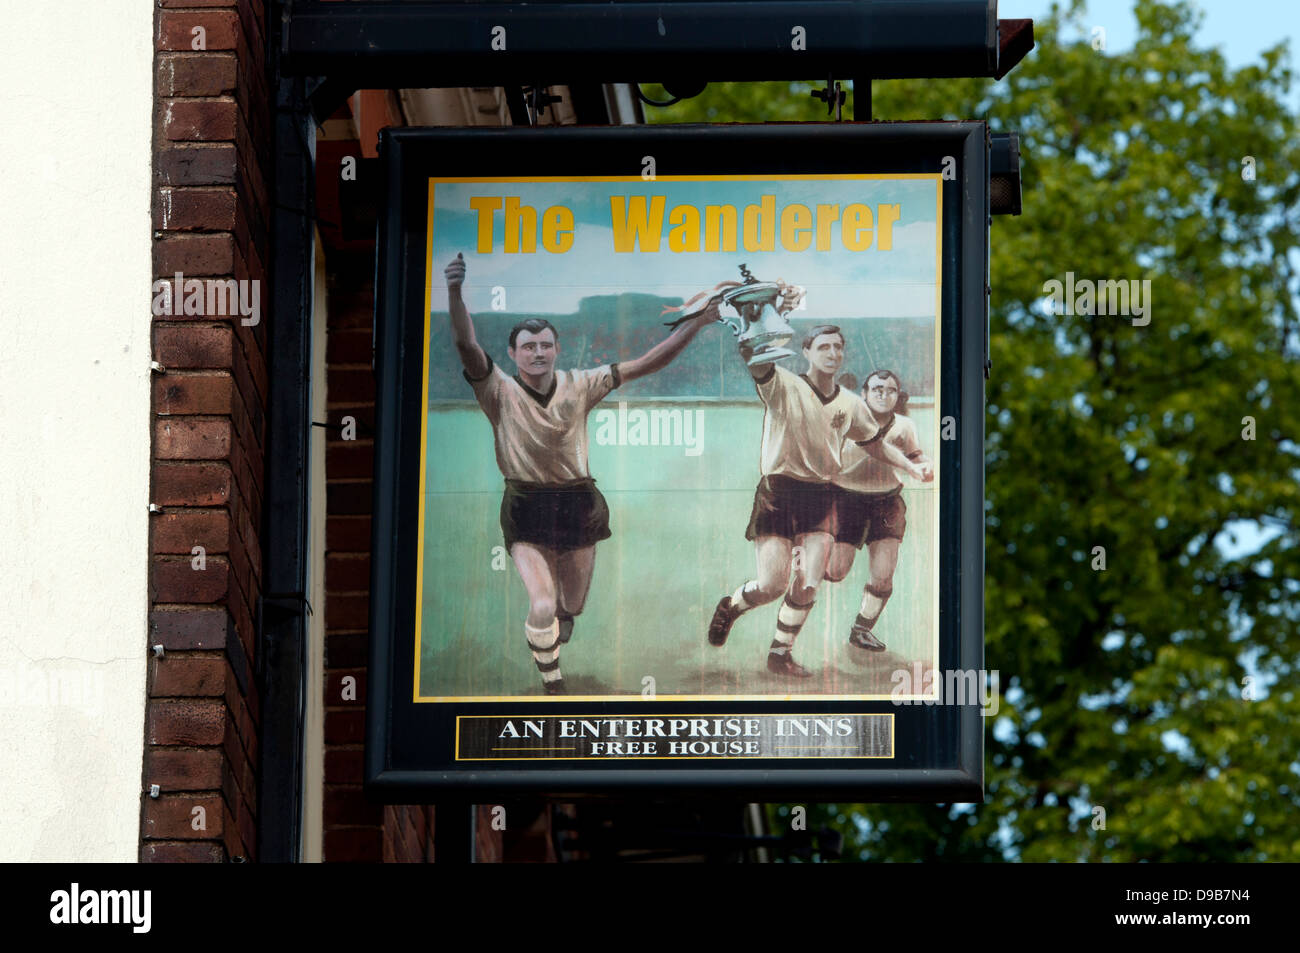 The Wanderer pub sign, Wolverhampton, UK Stock Photo